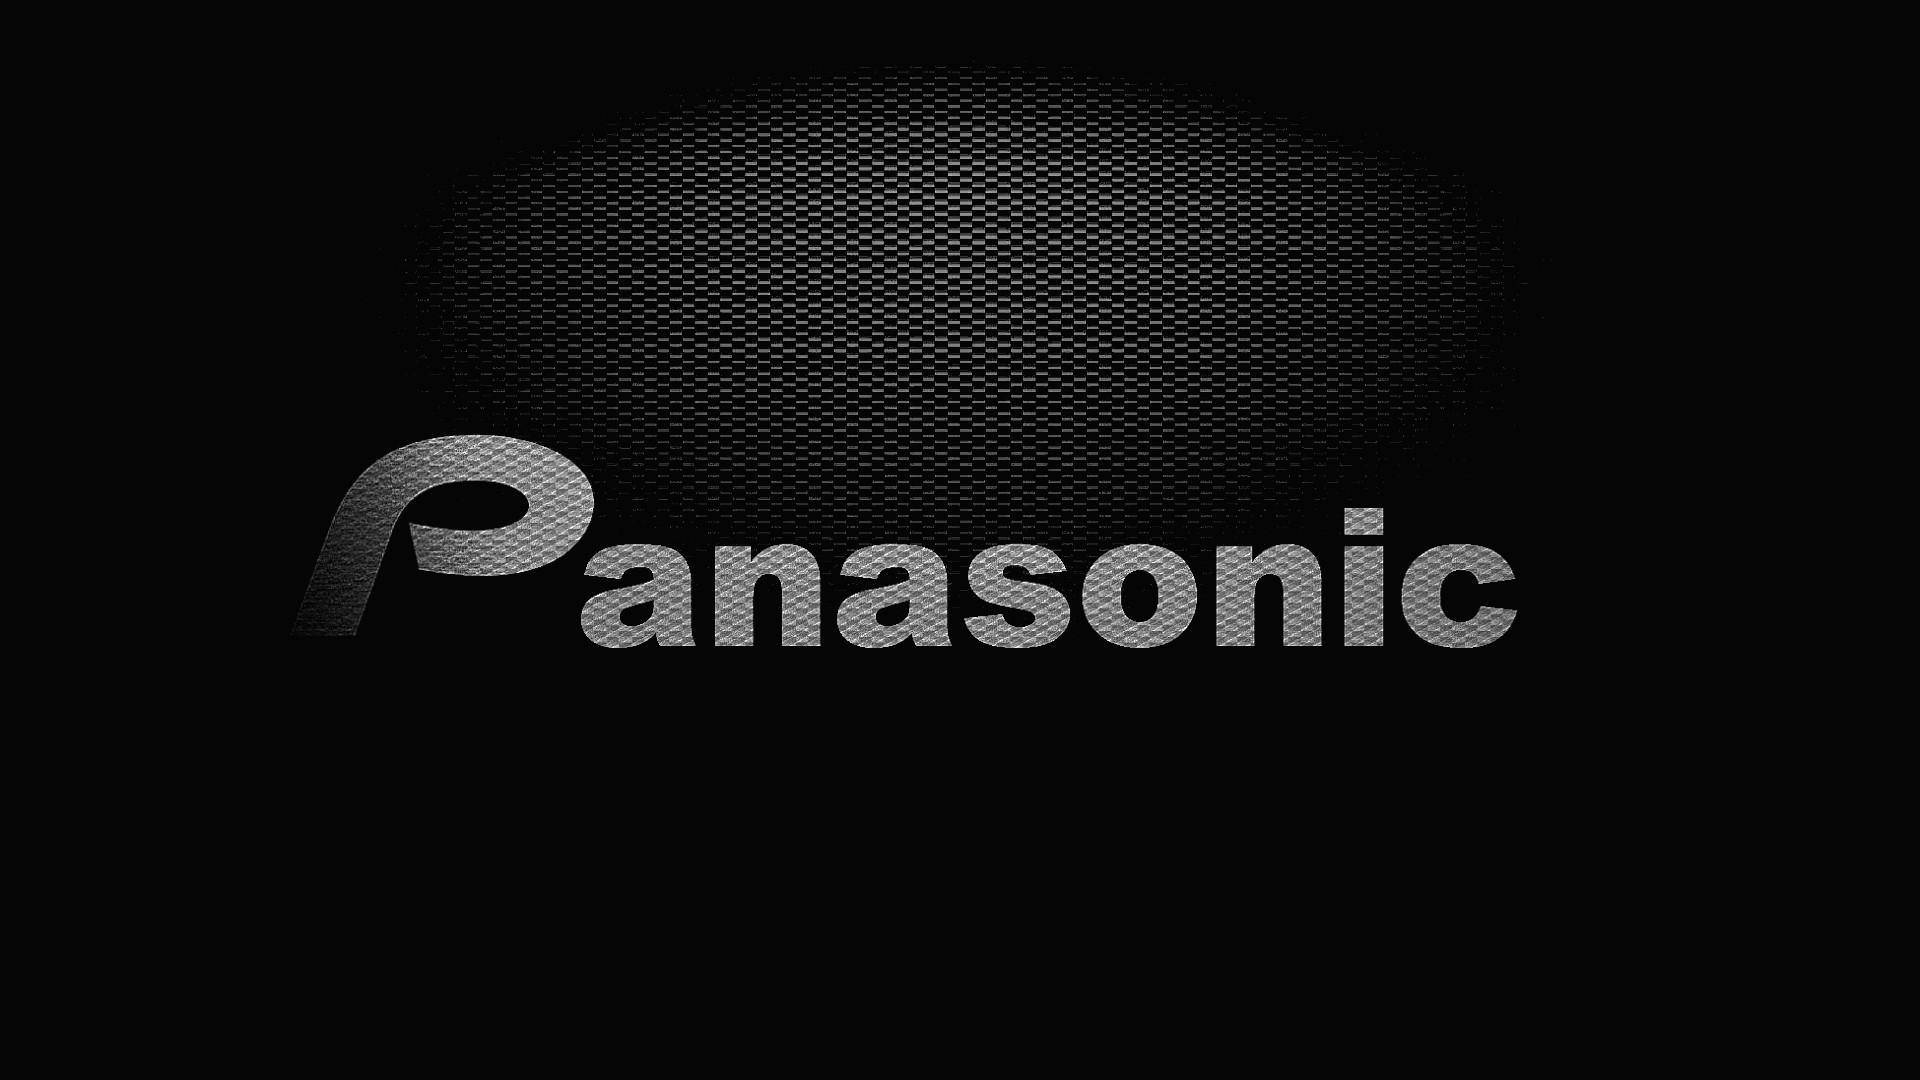 Grey Panasonic In Black